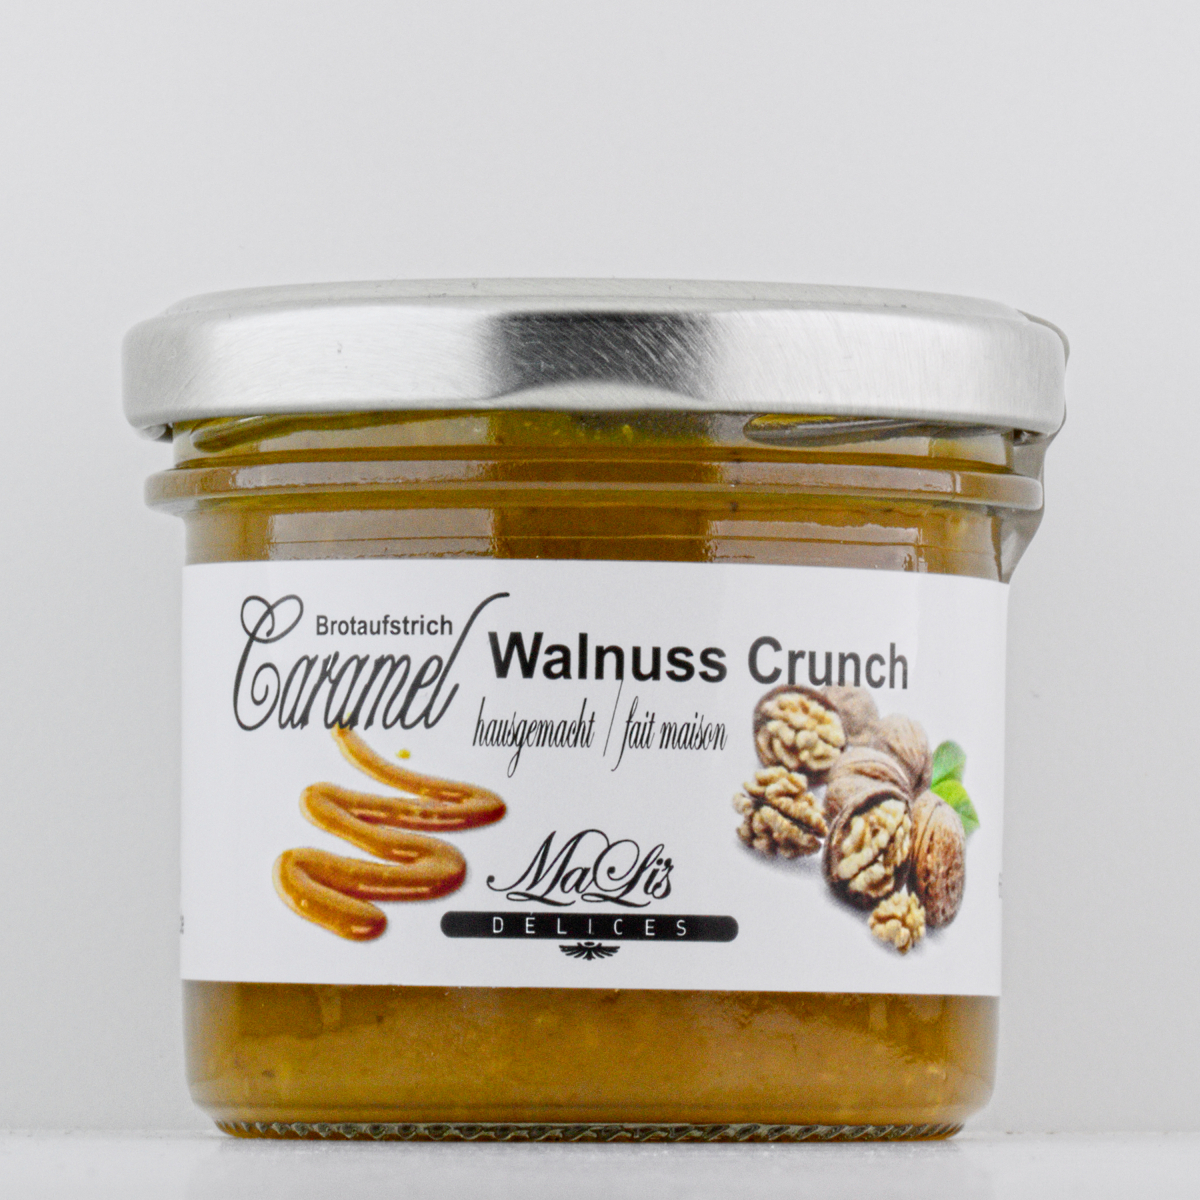 Walnuss Crunch Caramel